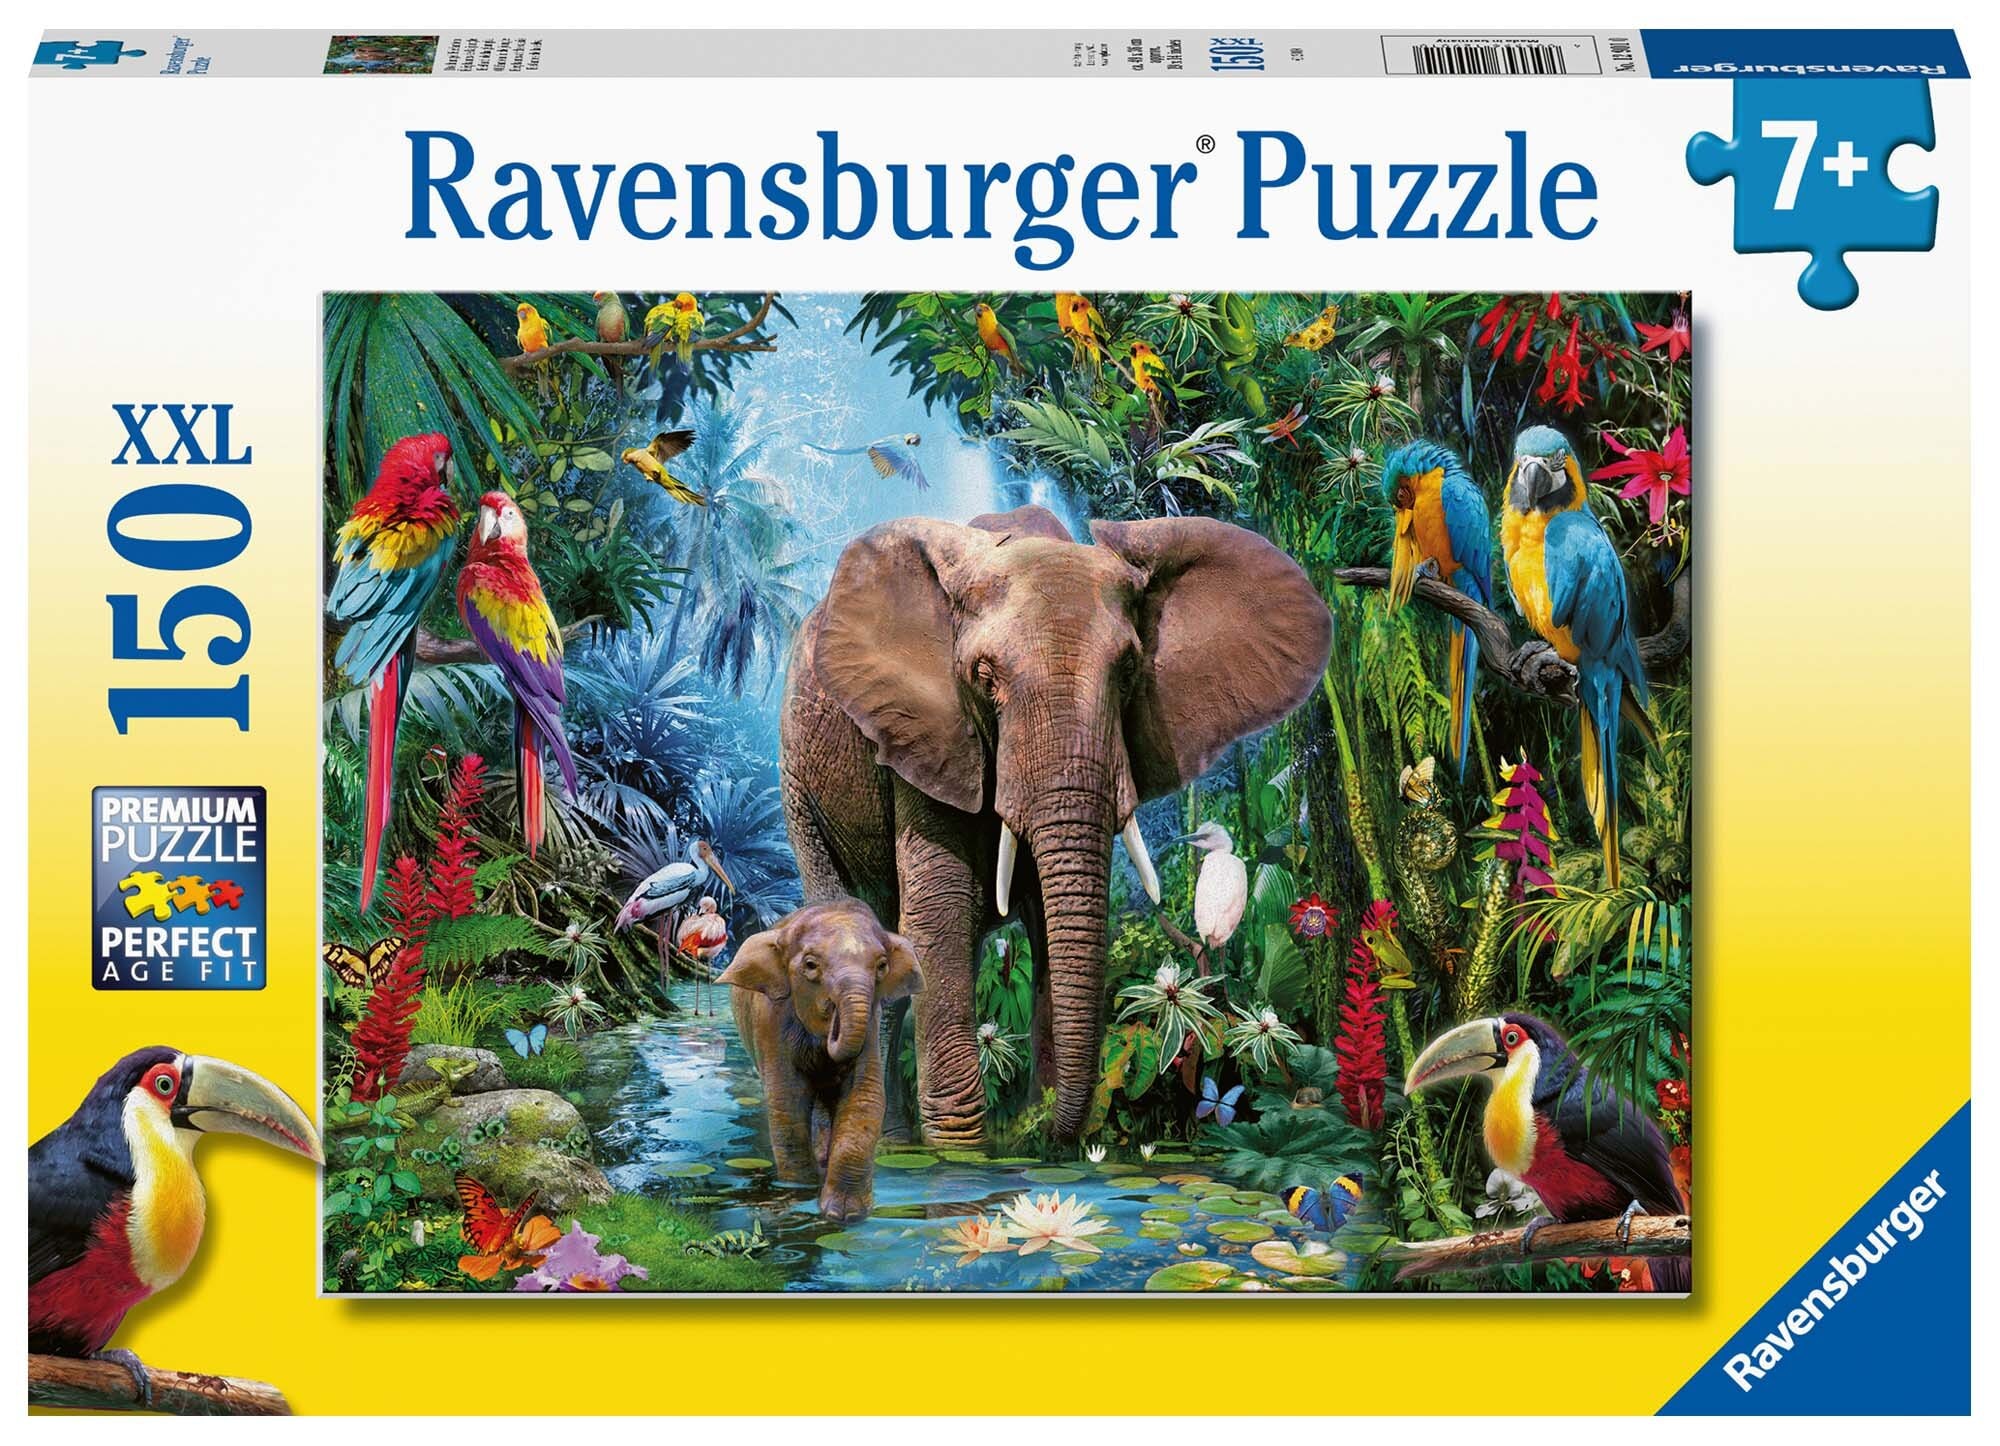 Ravensburger Puzzle - Dschungelelefanten 150 Teile XXL